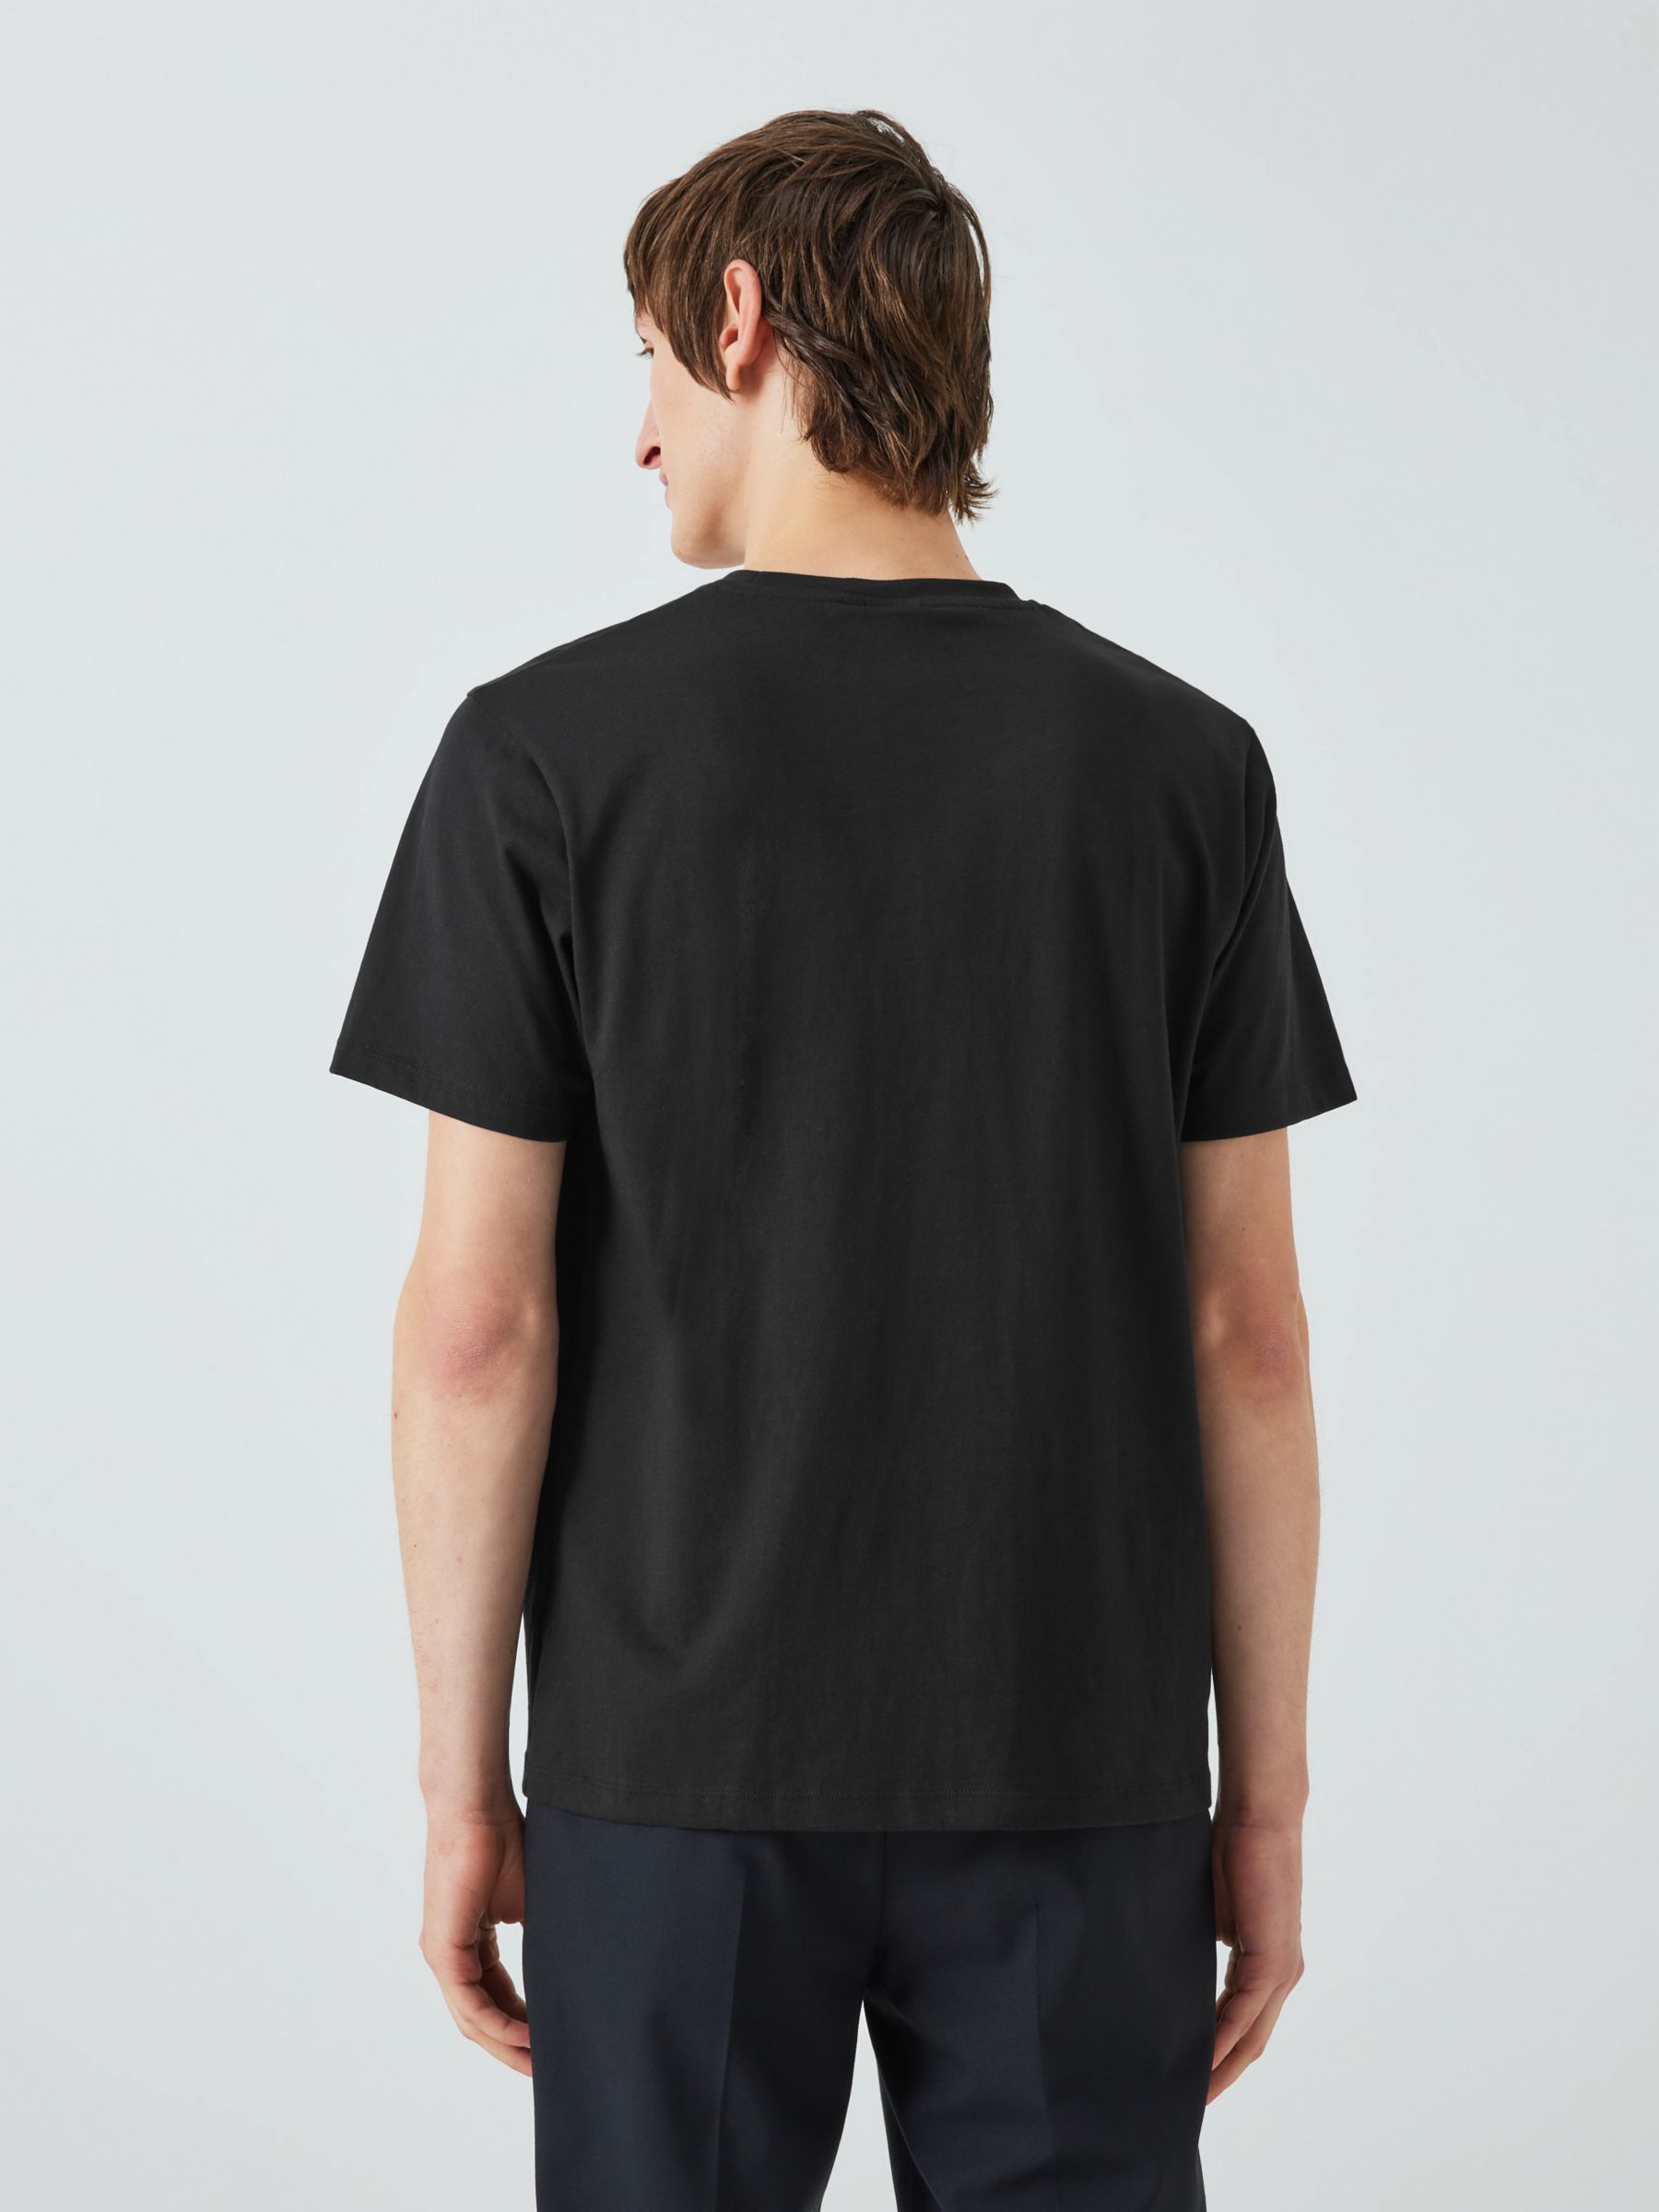 Kin Logo Cotton T-Shirt, Black Beauty, S